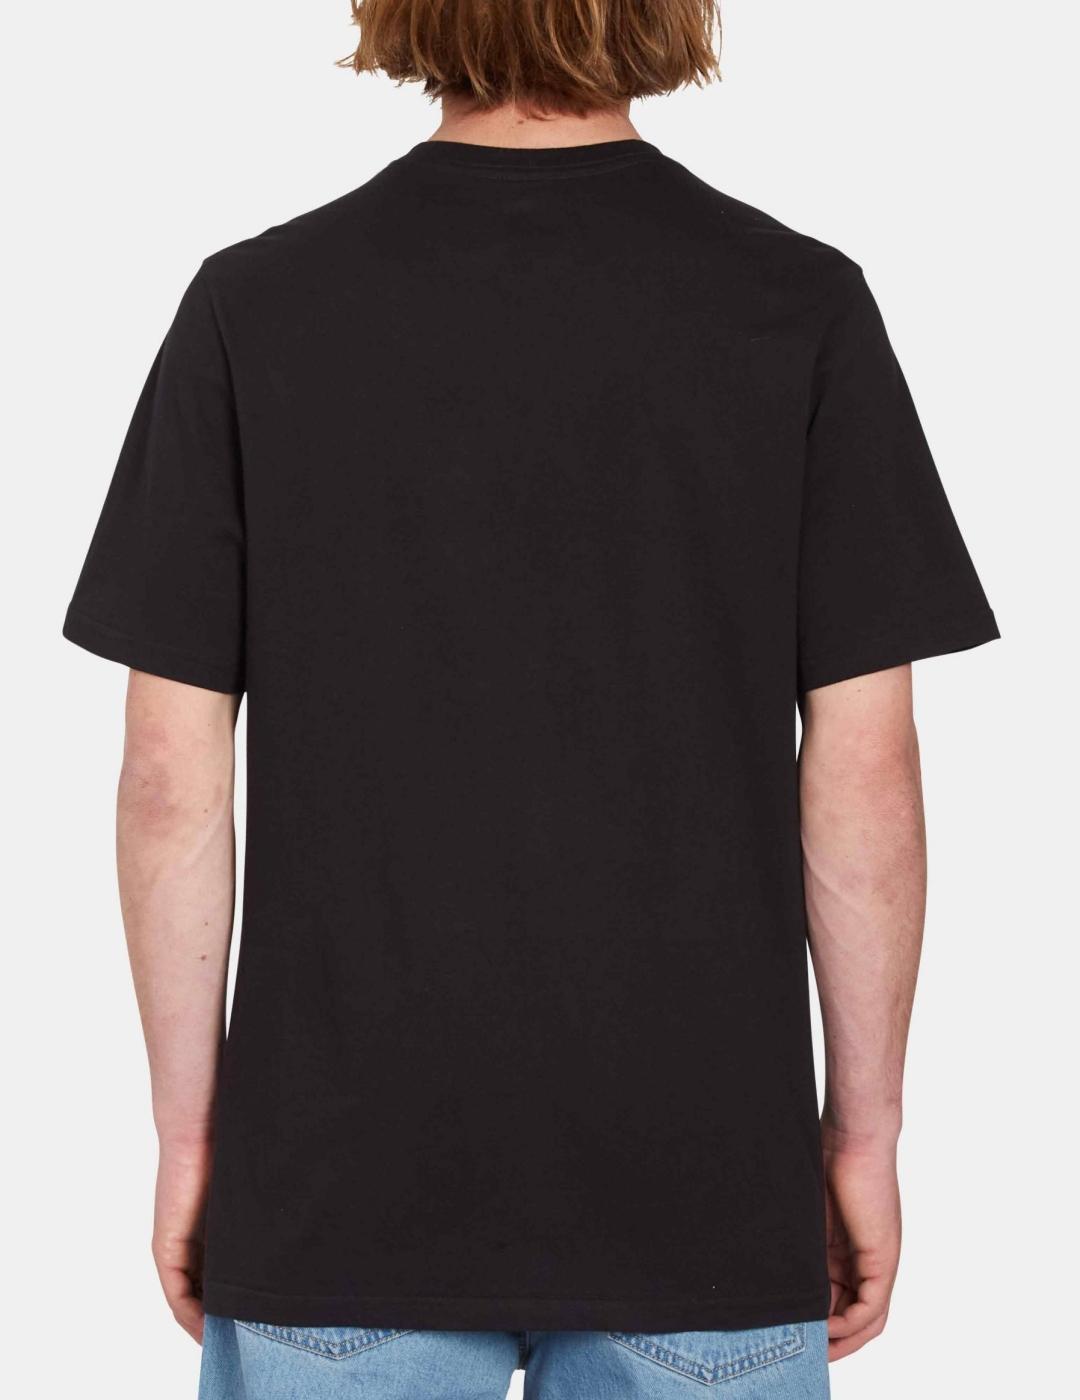 Camiseta VOLCOM FA J HAGER HAGERHAWK - Black